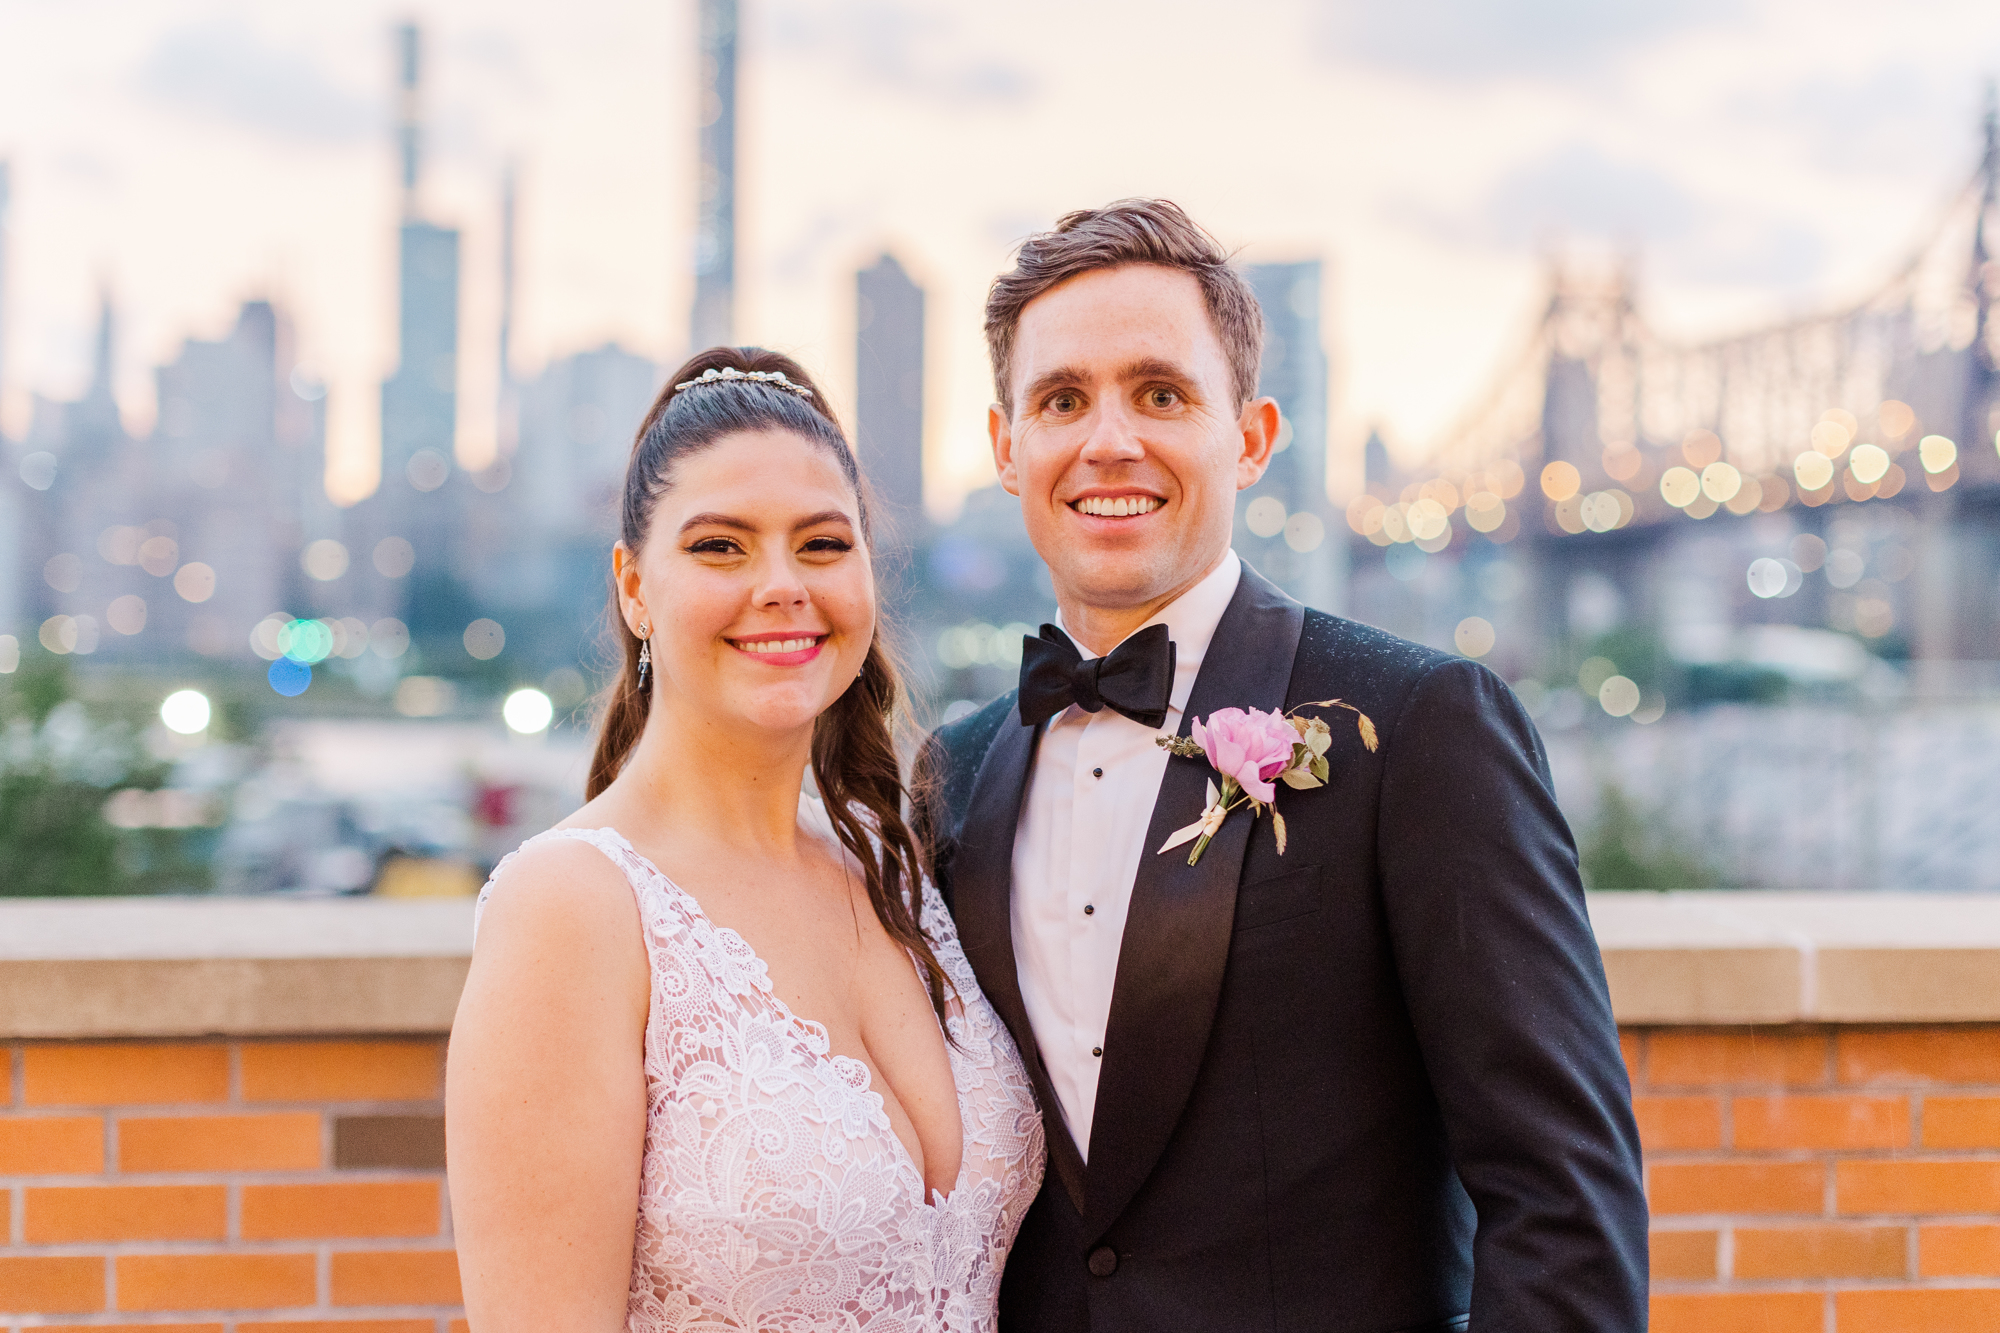 Special Bordone Wedding Photos in Long Island City with NYC Skyline